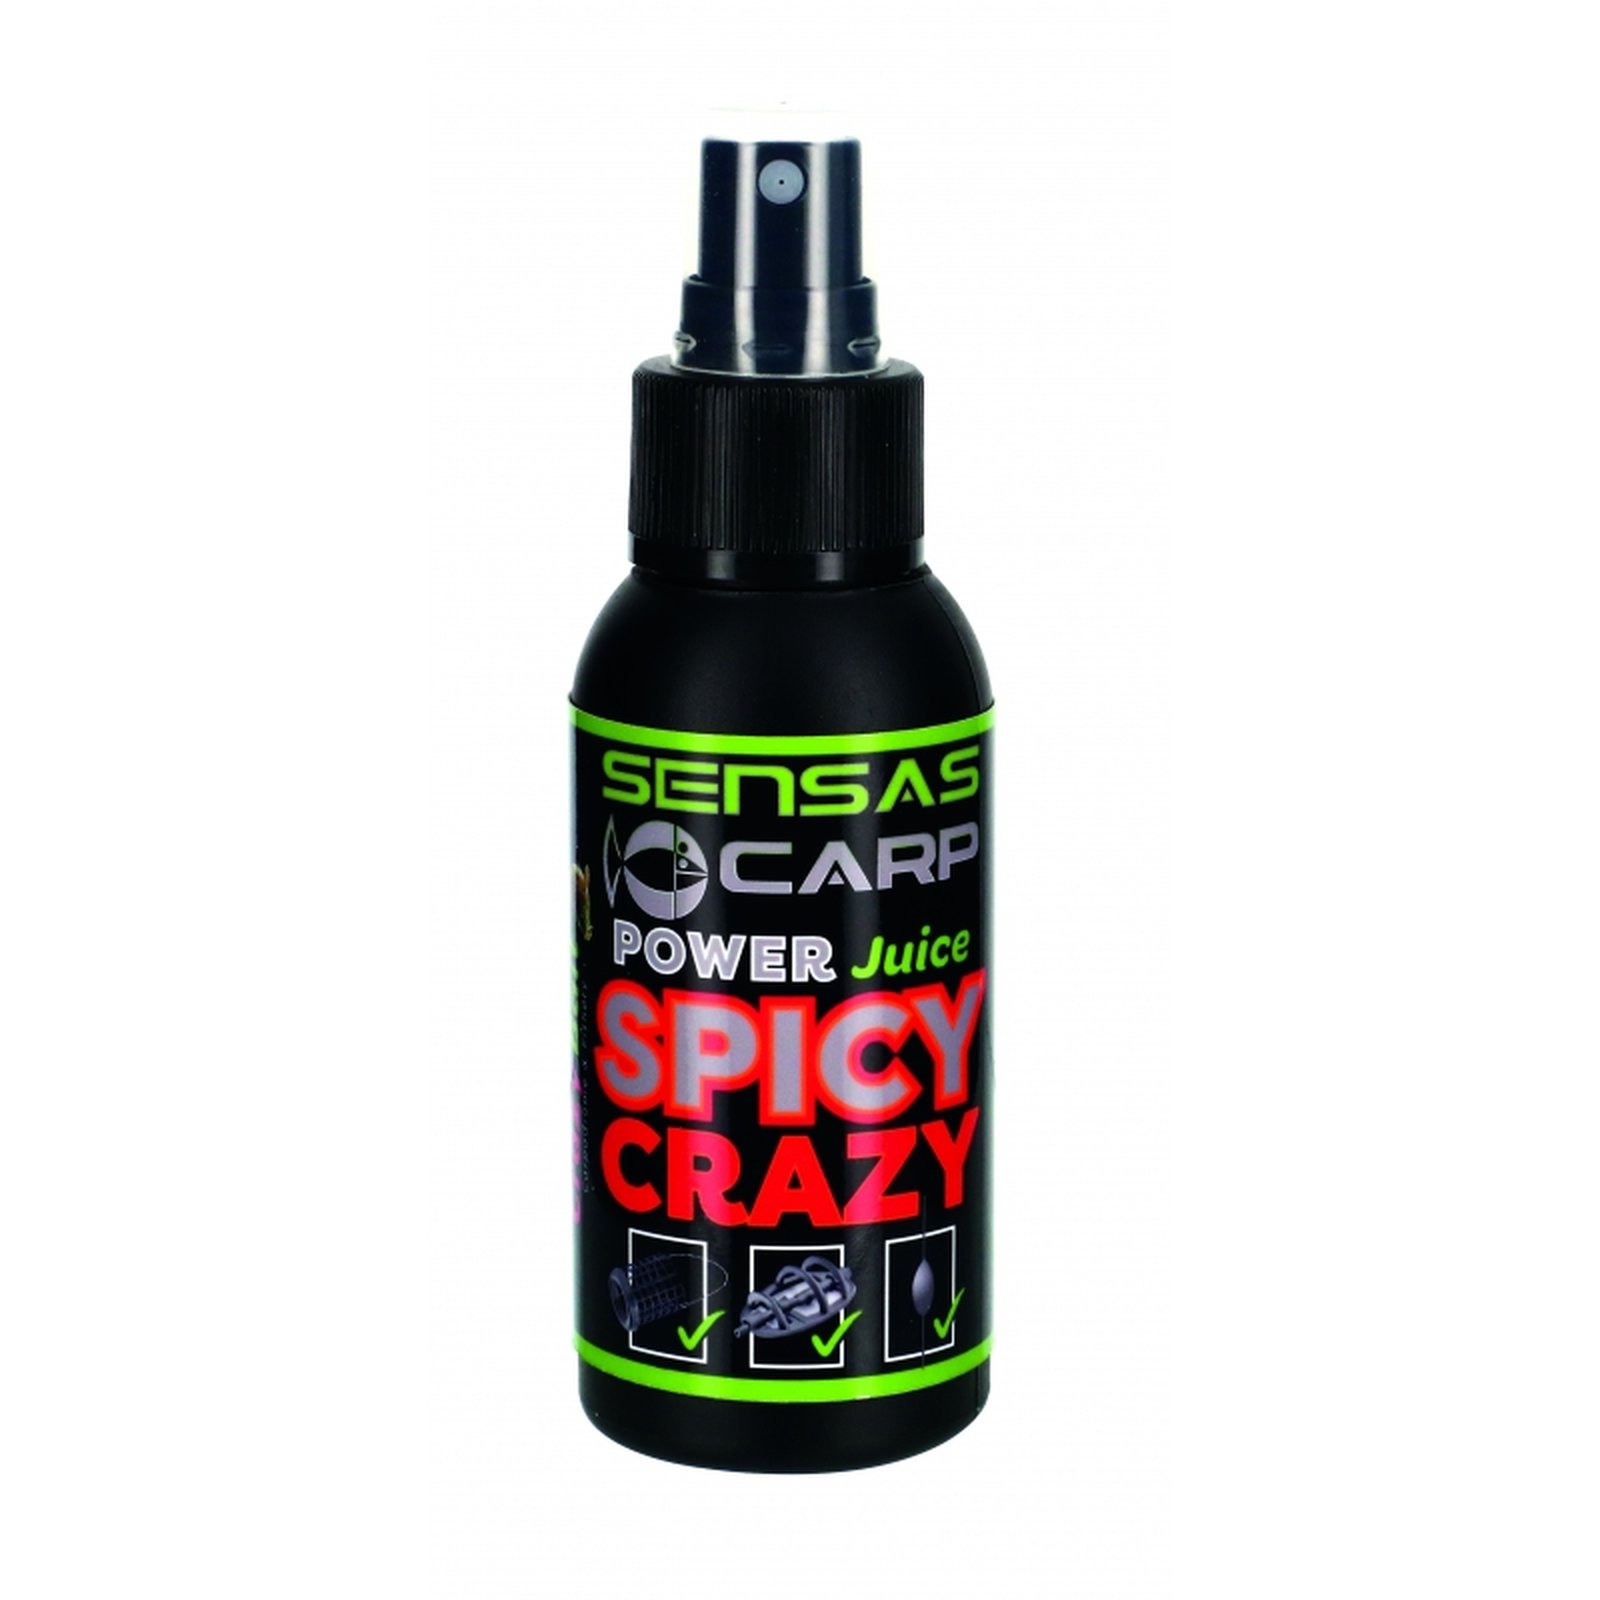 Sensas Power Juice Spicy Crazy 75ml